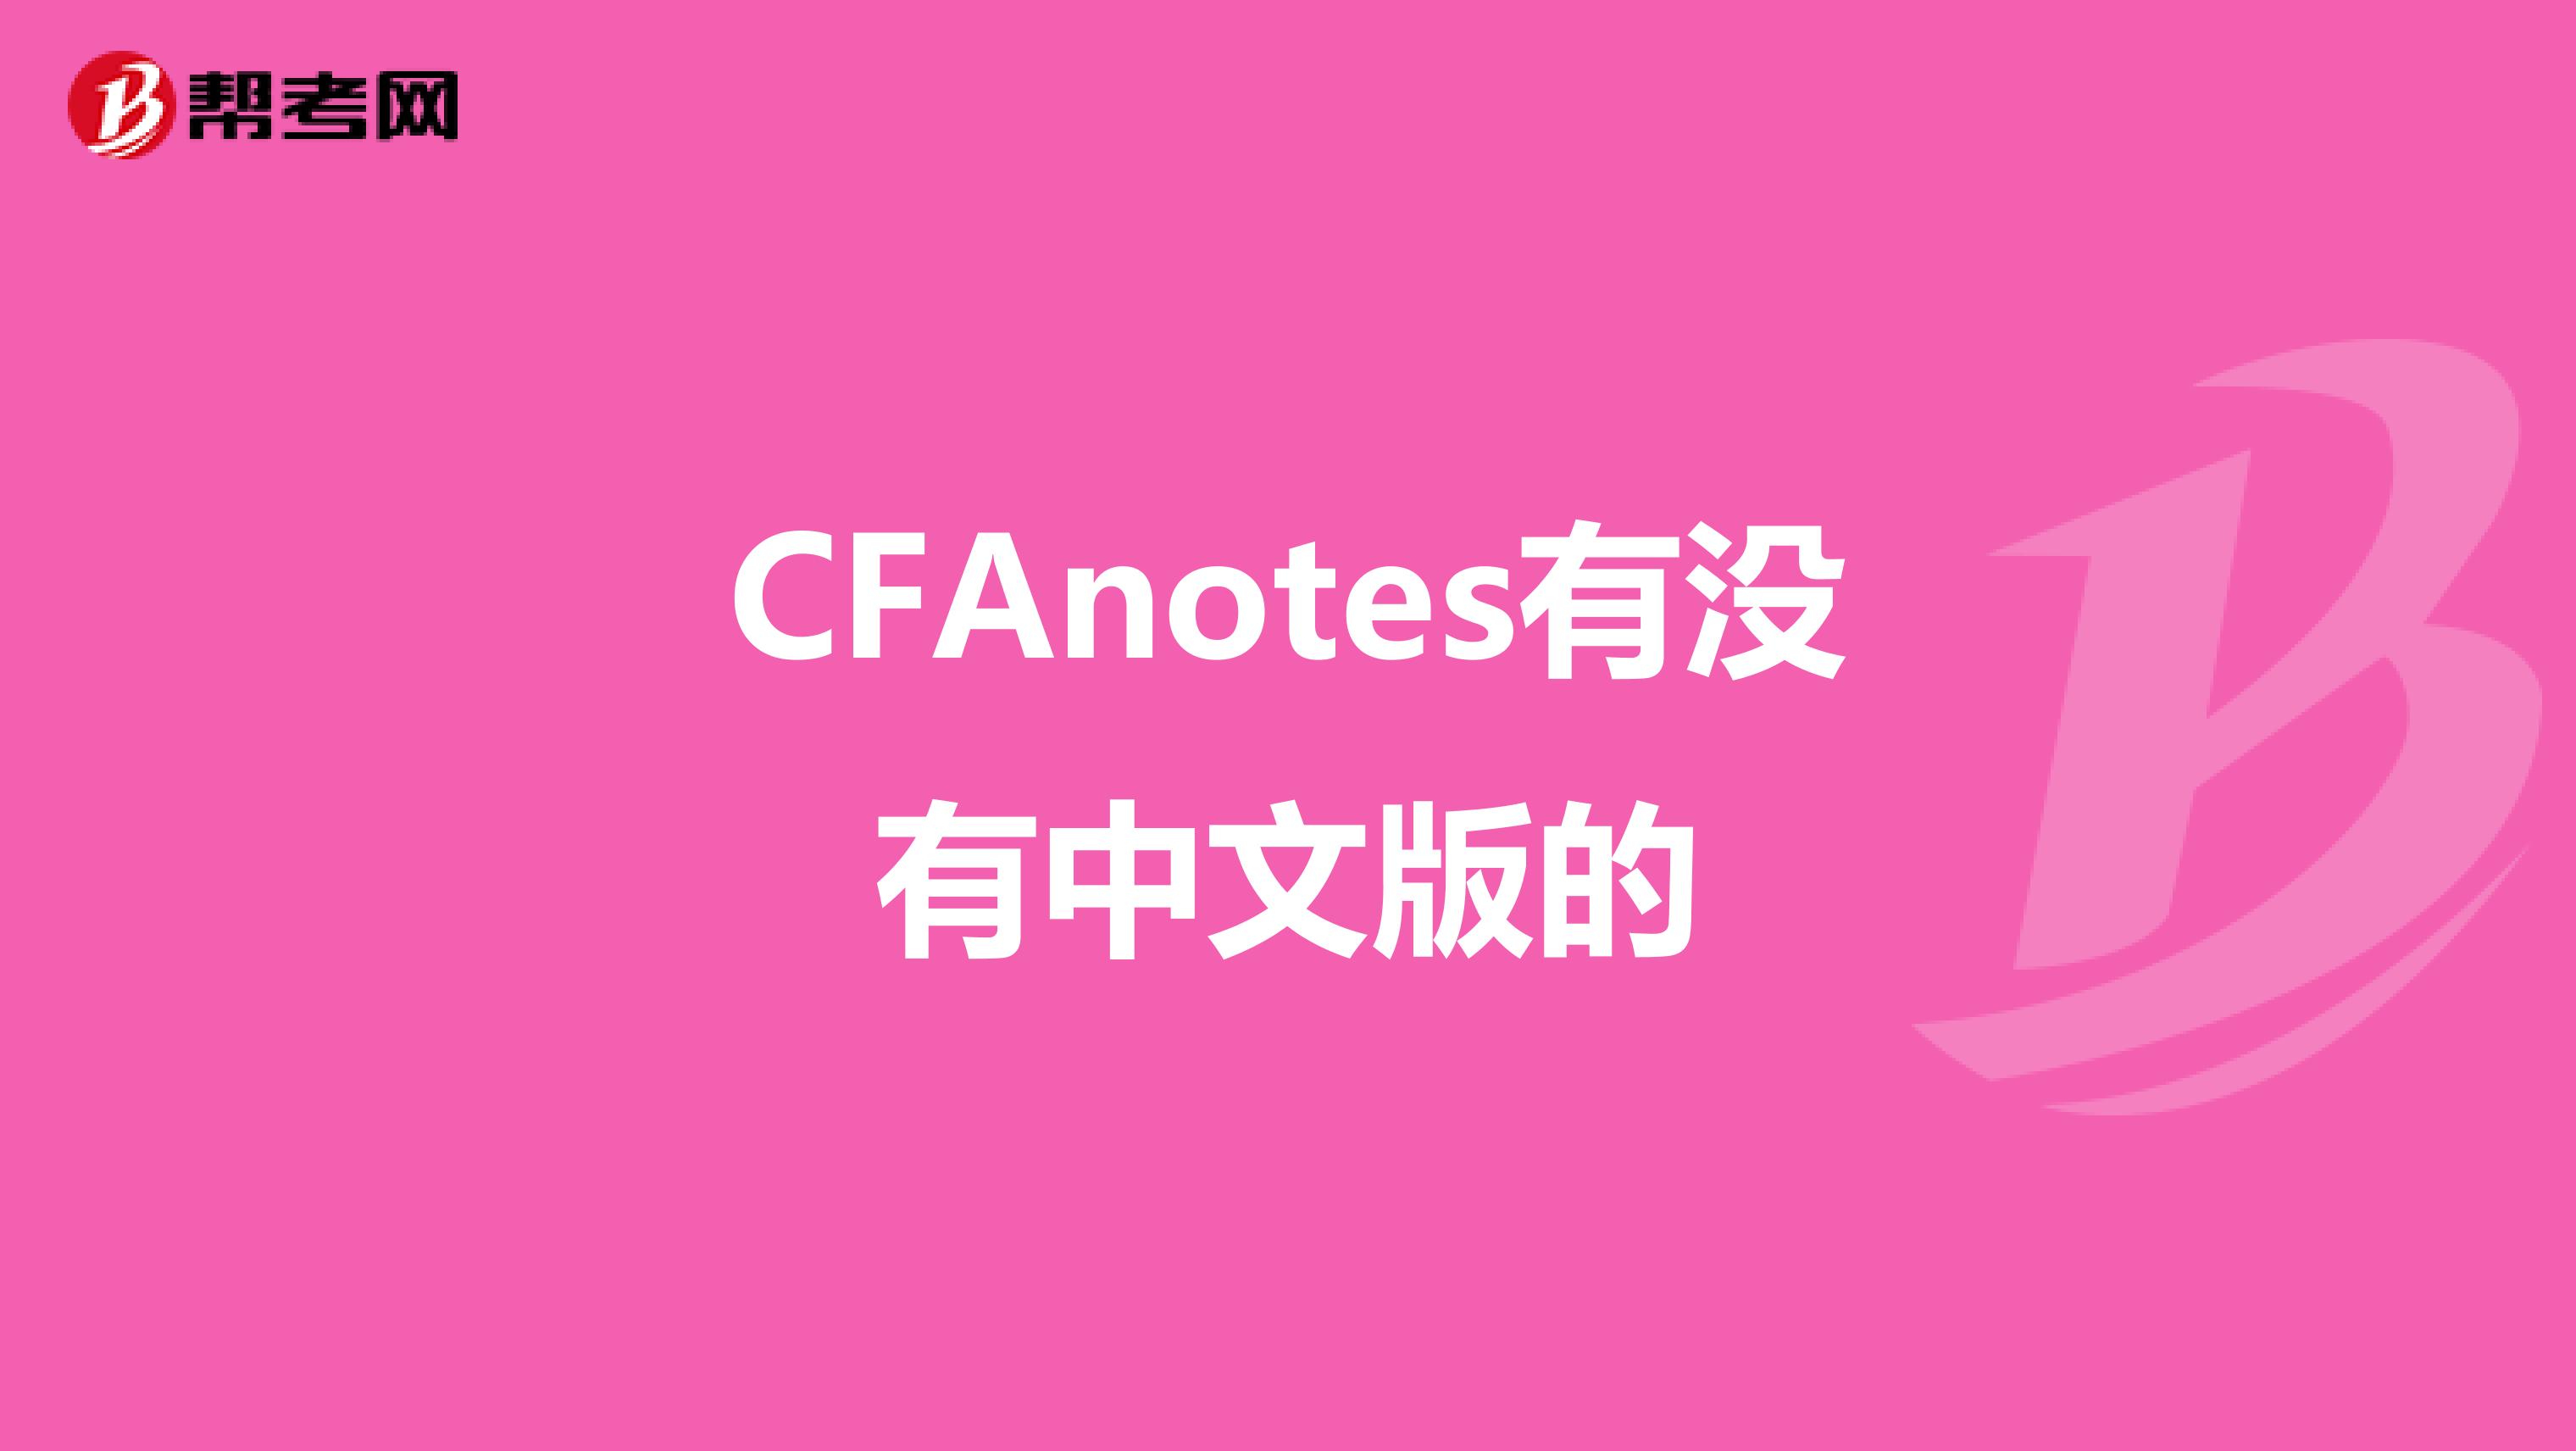 CFAnotes有没有中文版的